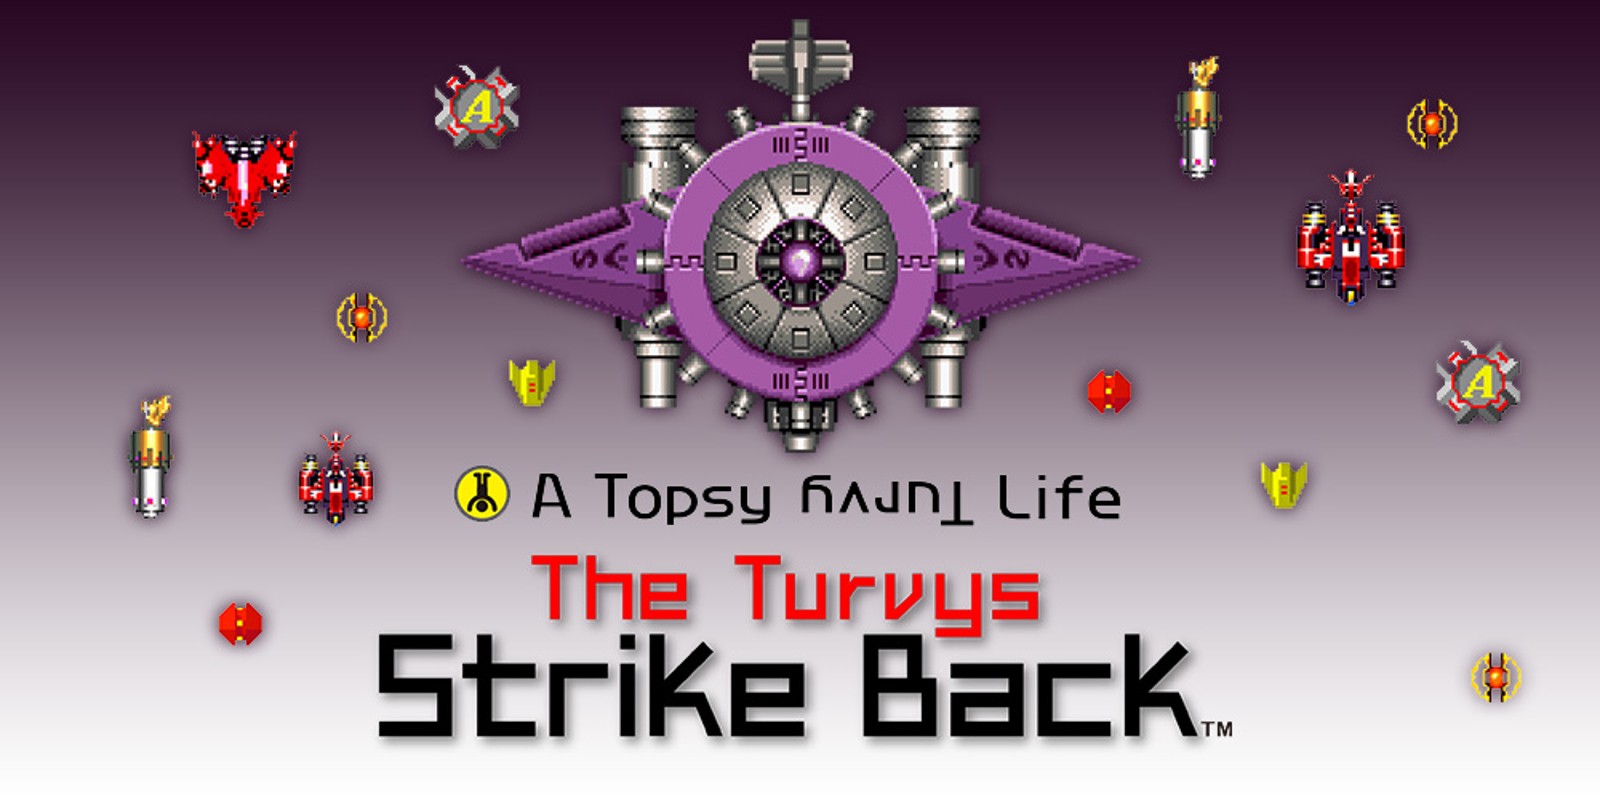 A Topsy Turvy Life The Turvys Strike Back™